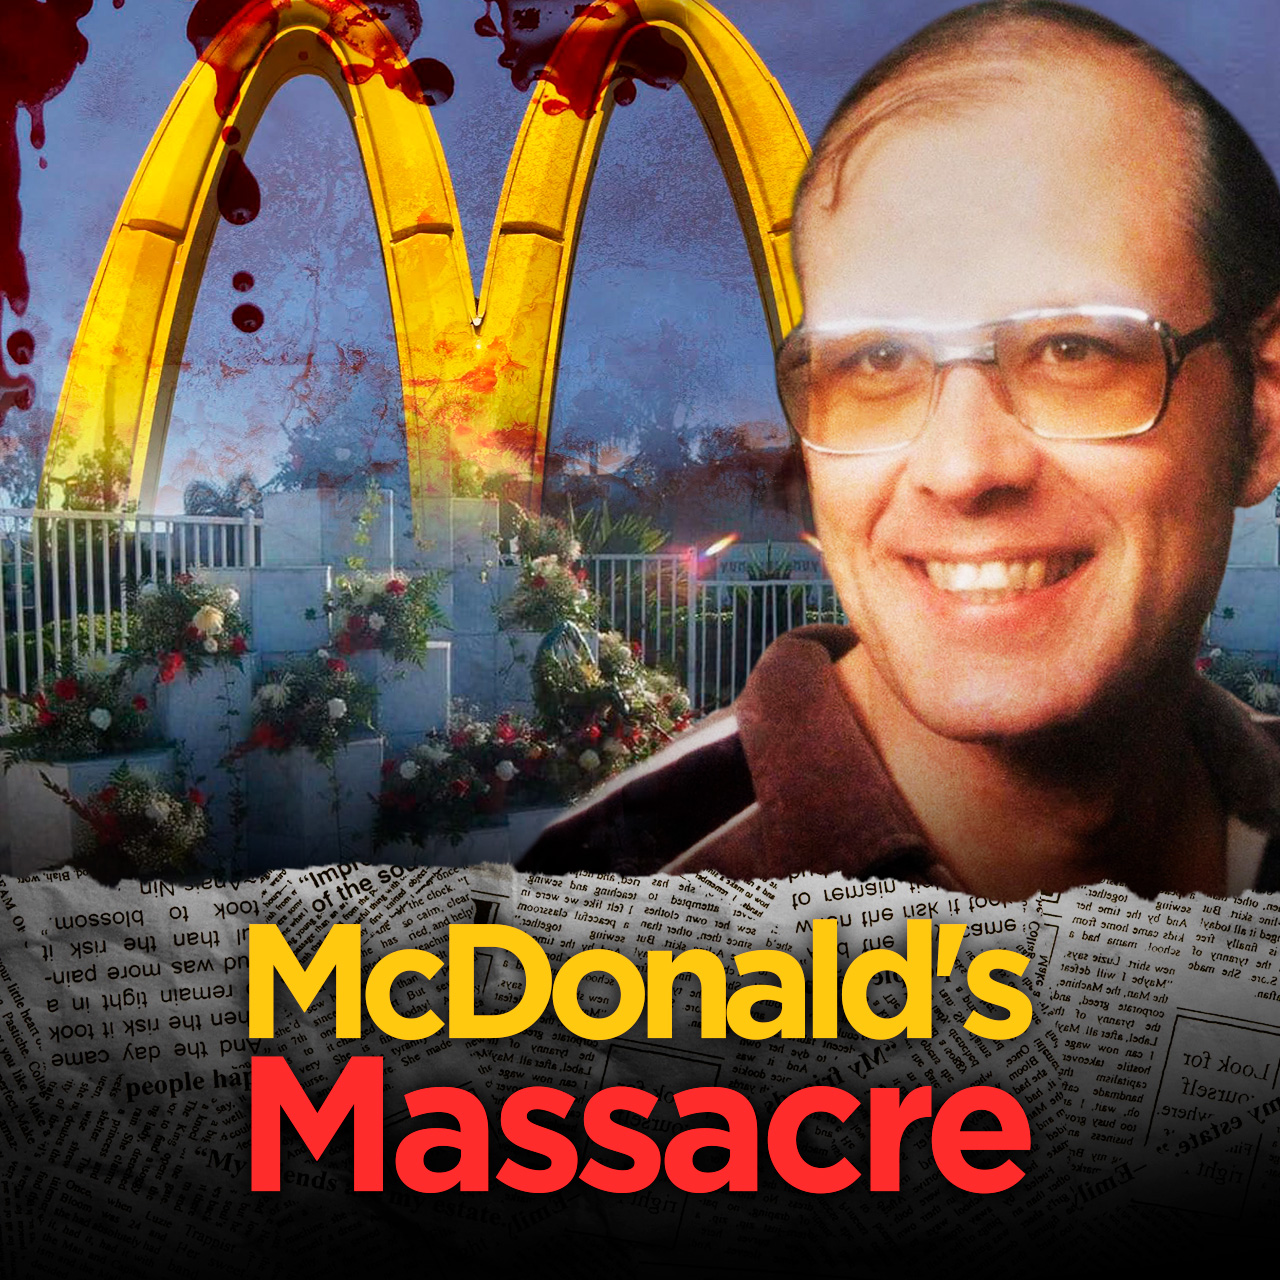 The Bizarre McDonald’s Massacre (1984)